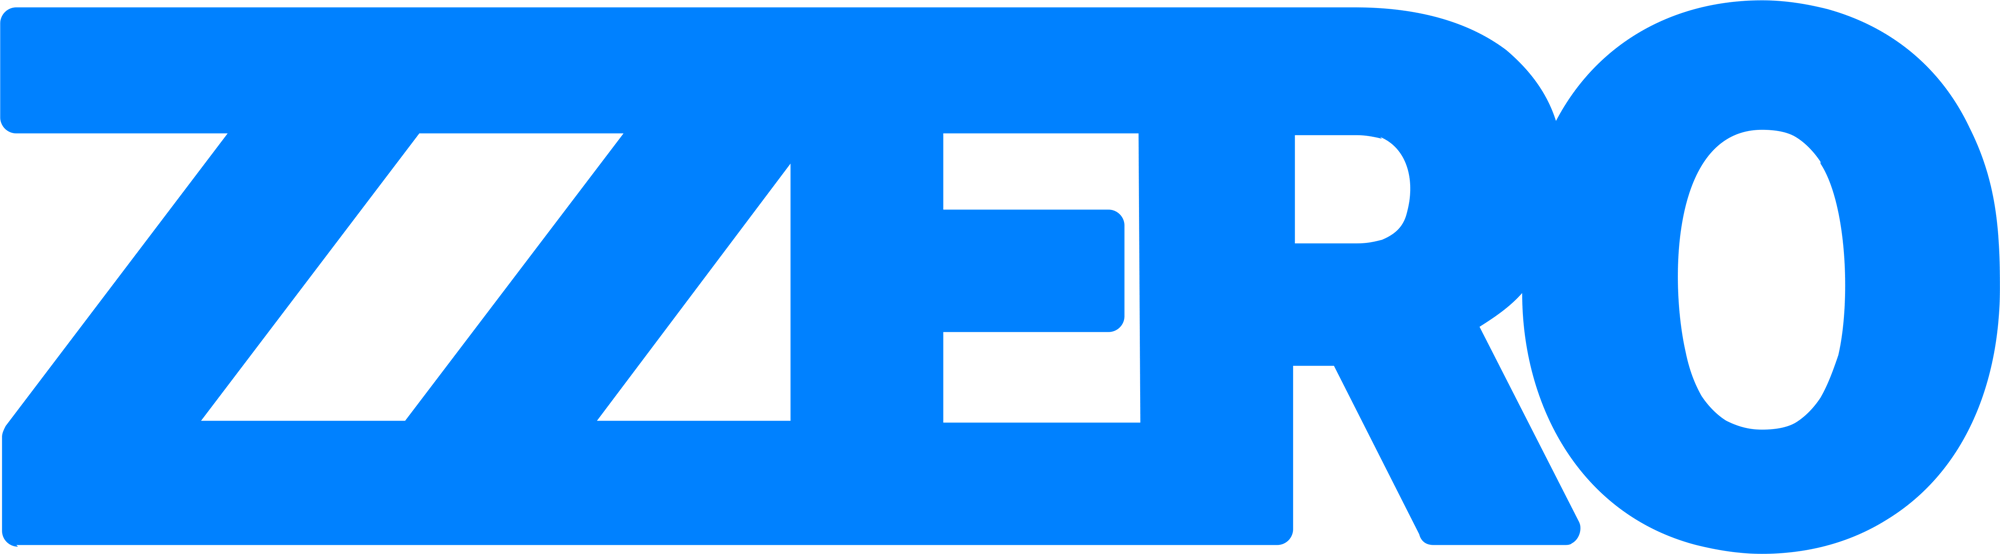 Zzero Gründermesse Logo